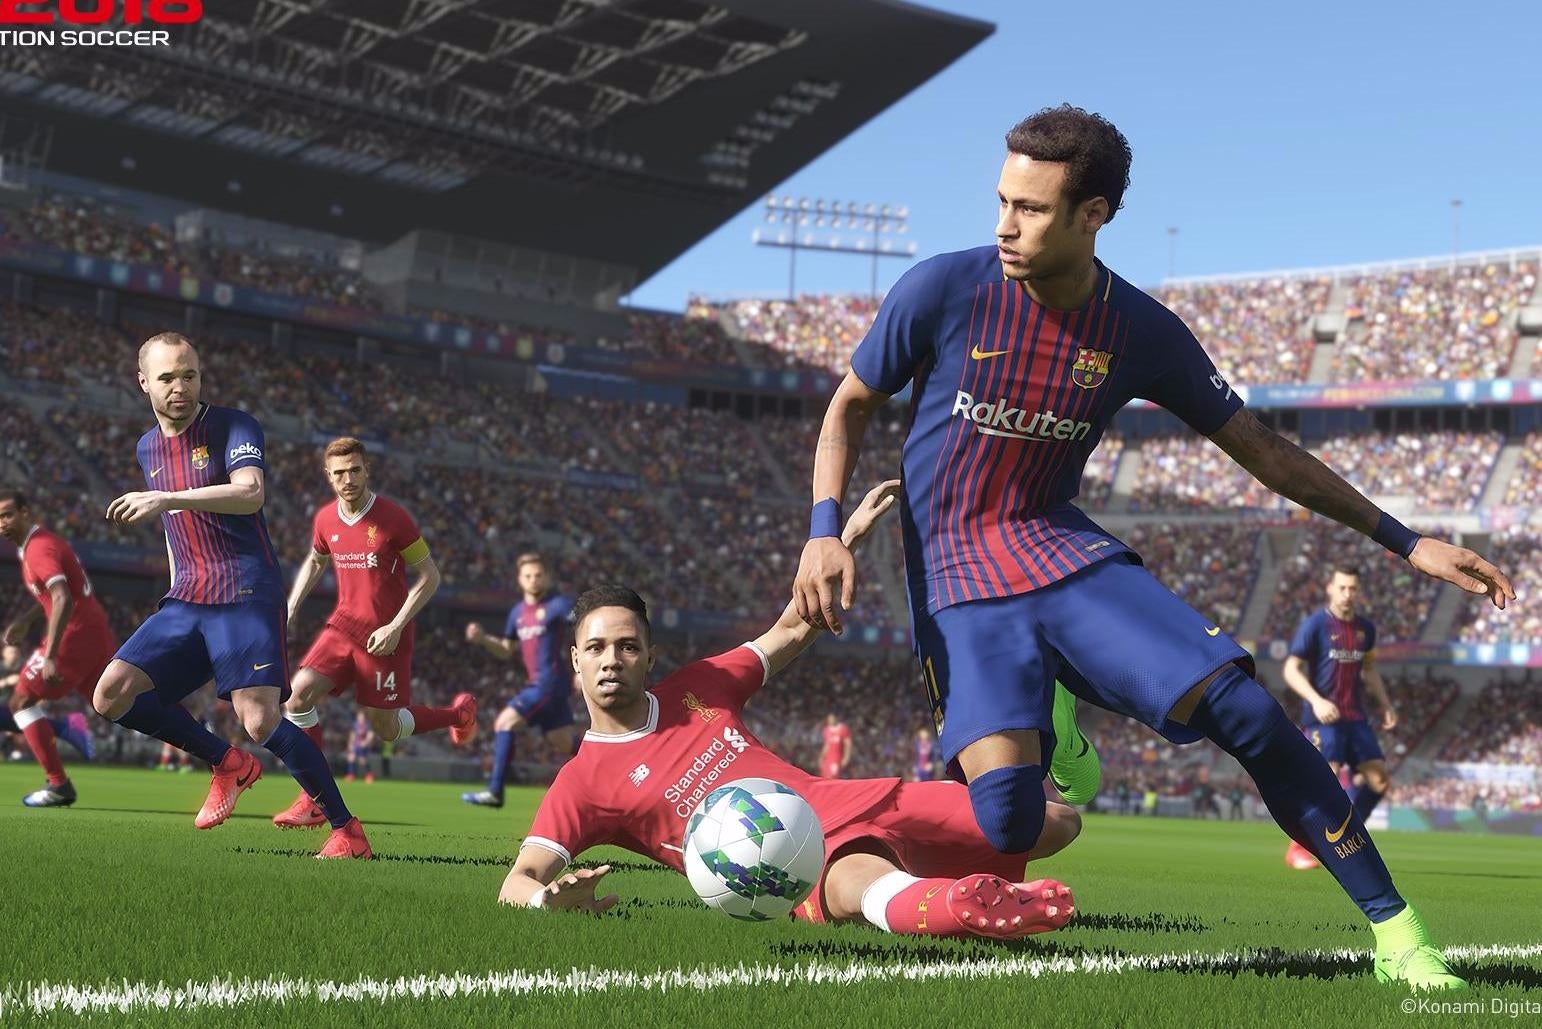 Imagen para Quince minutos de gameplay de Pro Evolution Soccer 2018 a 4K